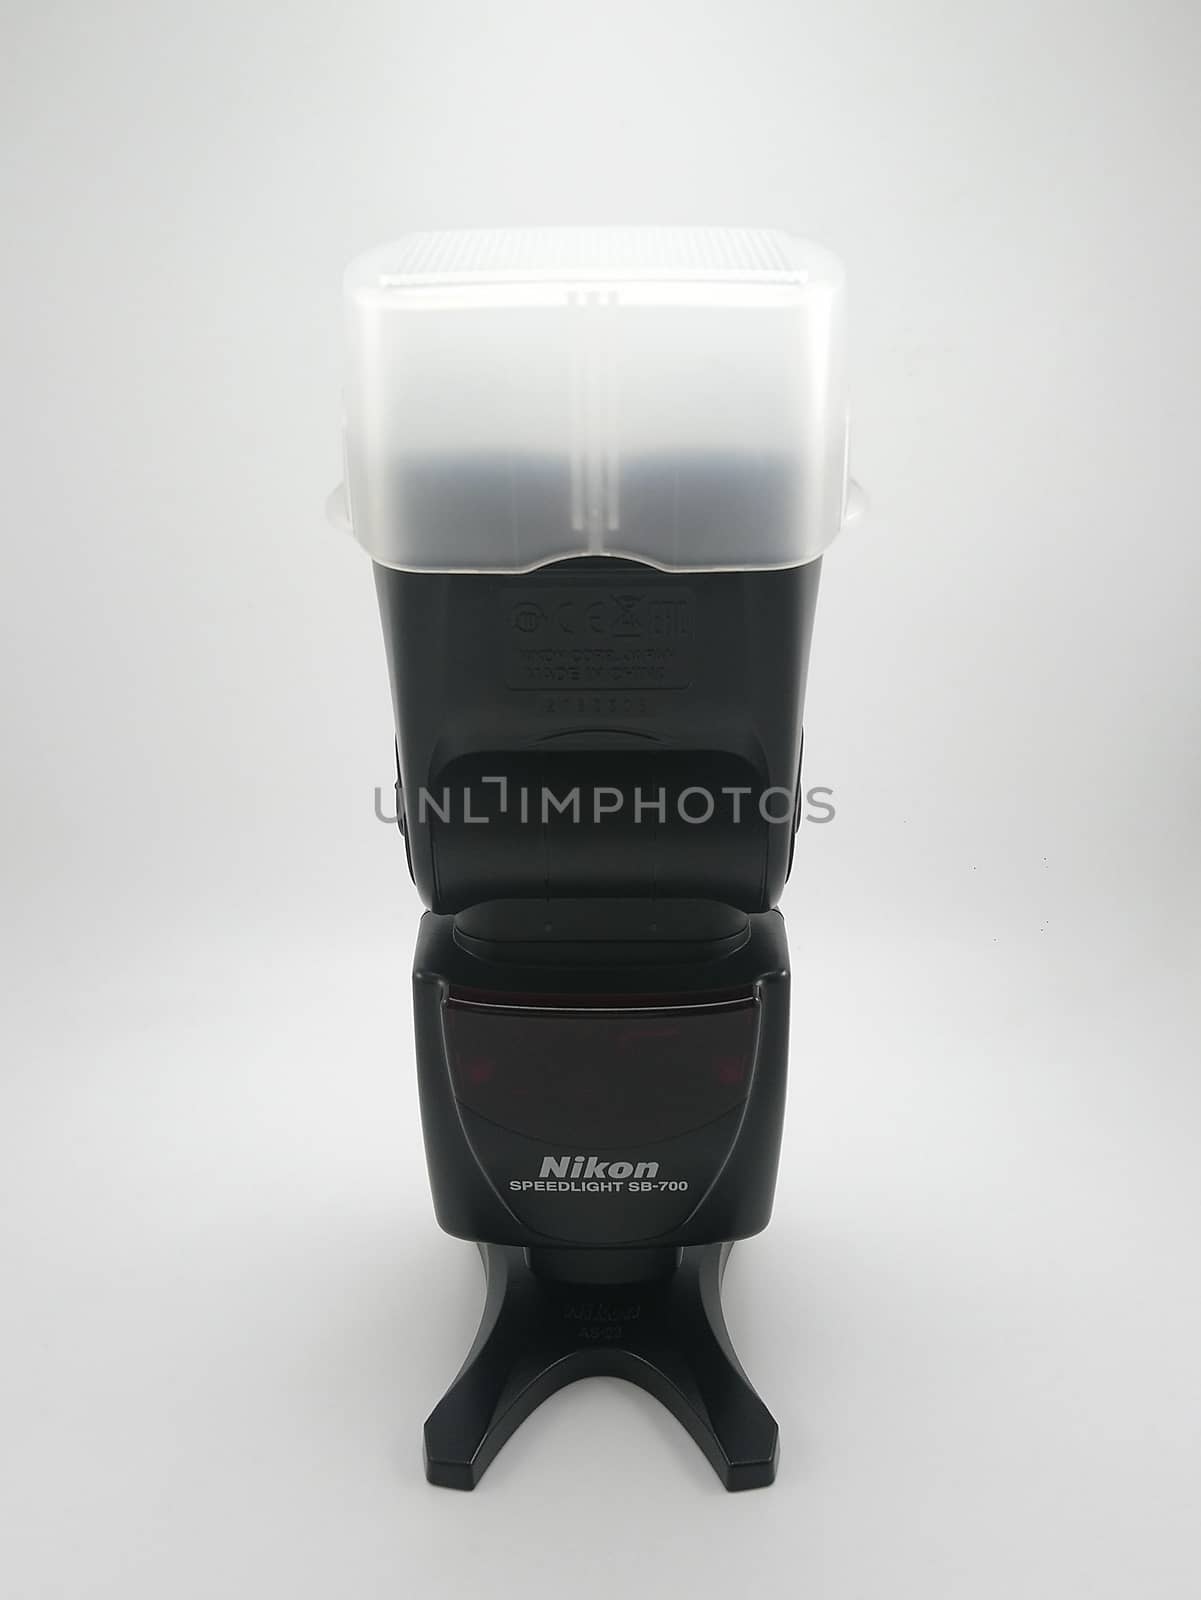 Nikon sb 700 flash speedlight with diffuser cap in Manila, Phili by imwaltersy